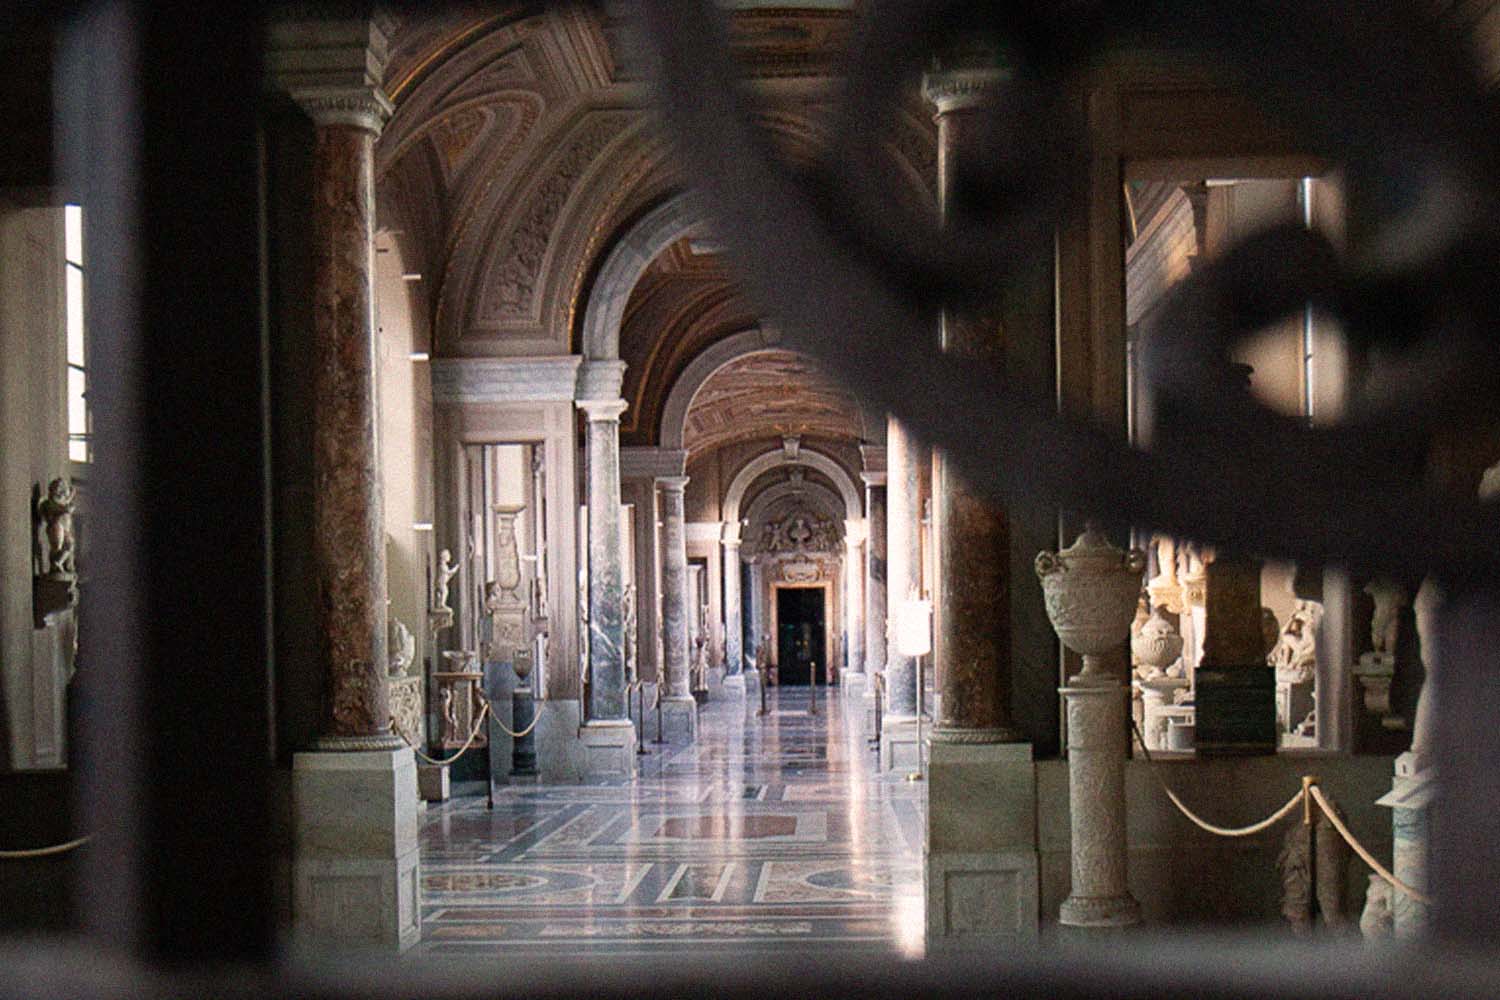 A look into a totally empty Vatican hallway